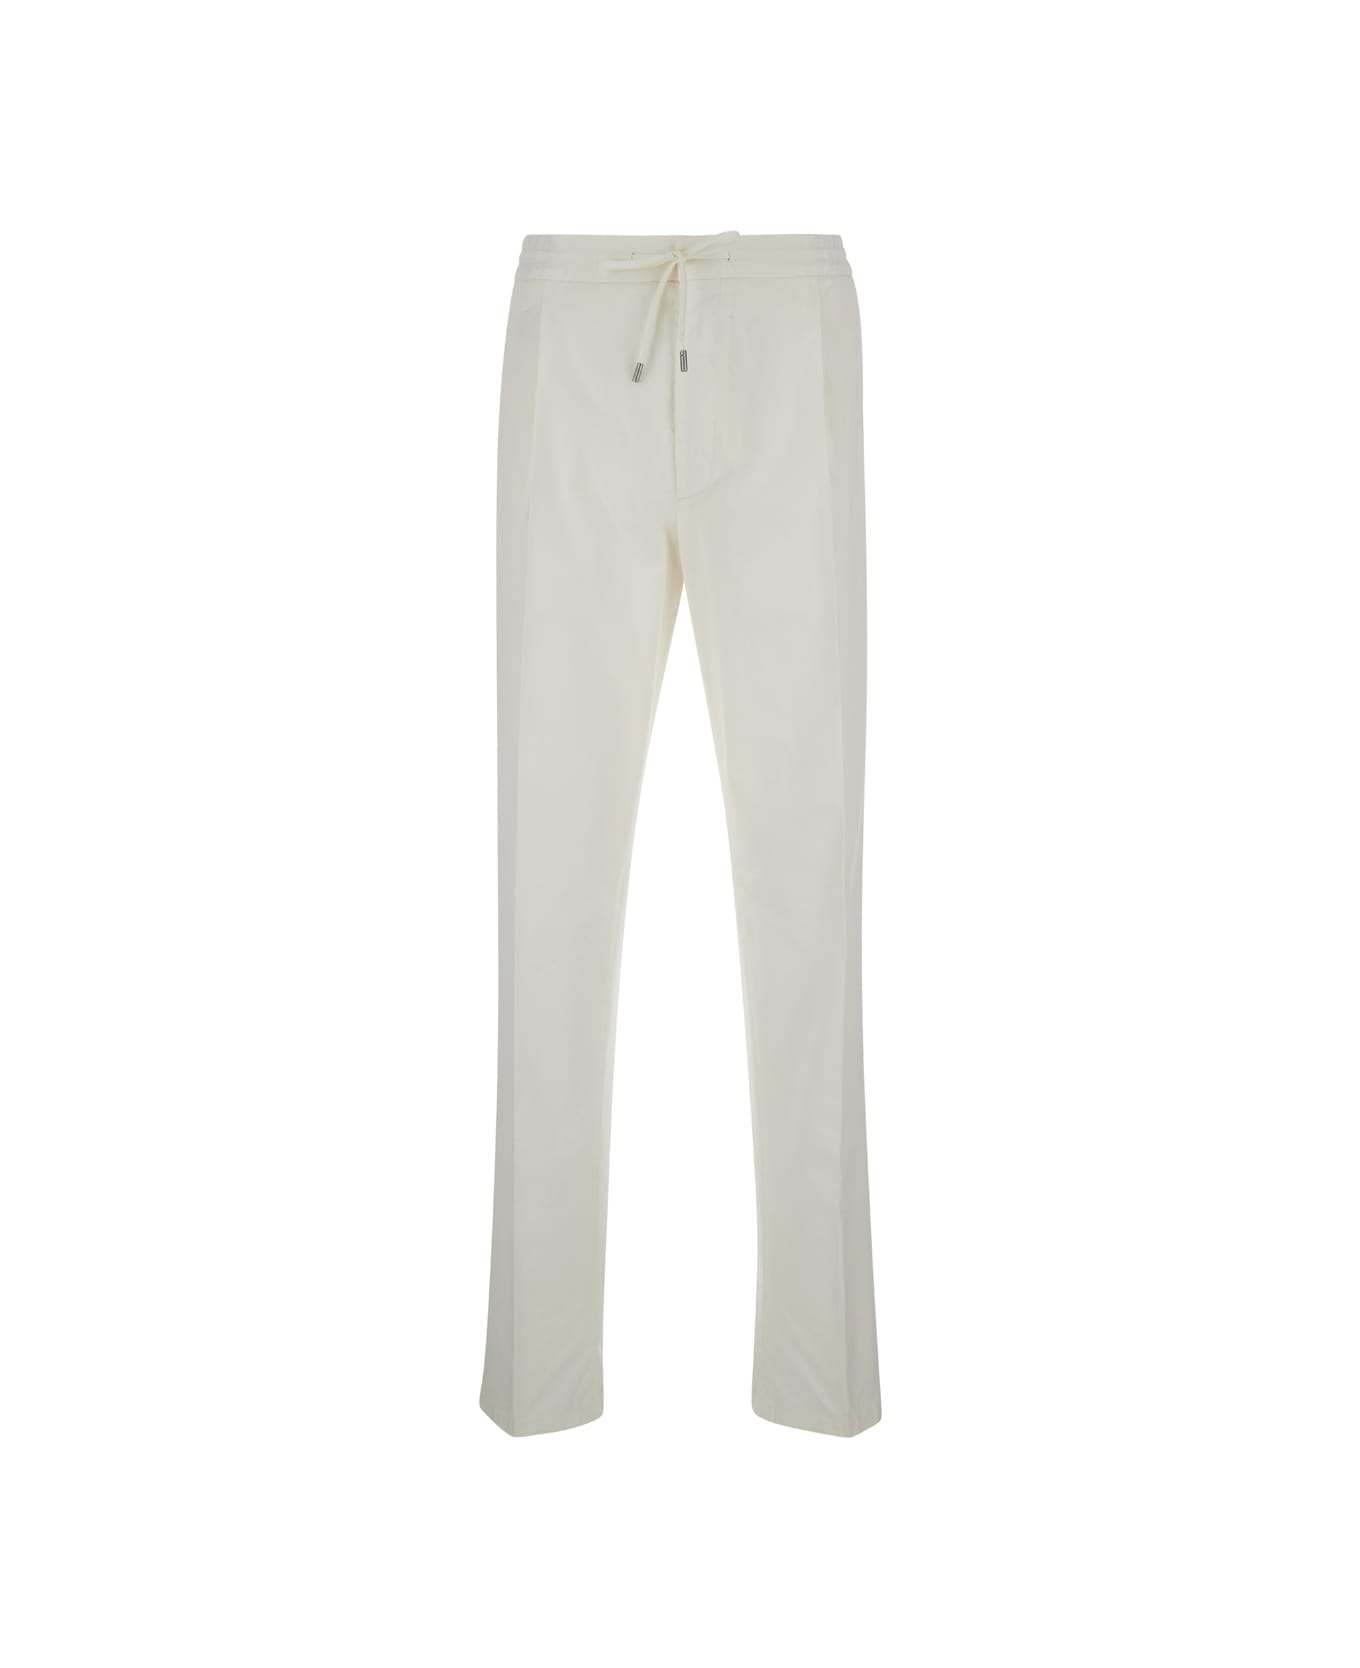 Lardini White Drawstring Tapered Trousers In Cotton Blend Man - White